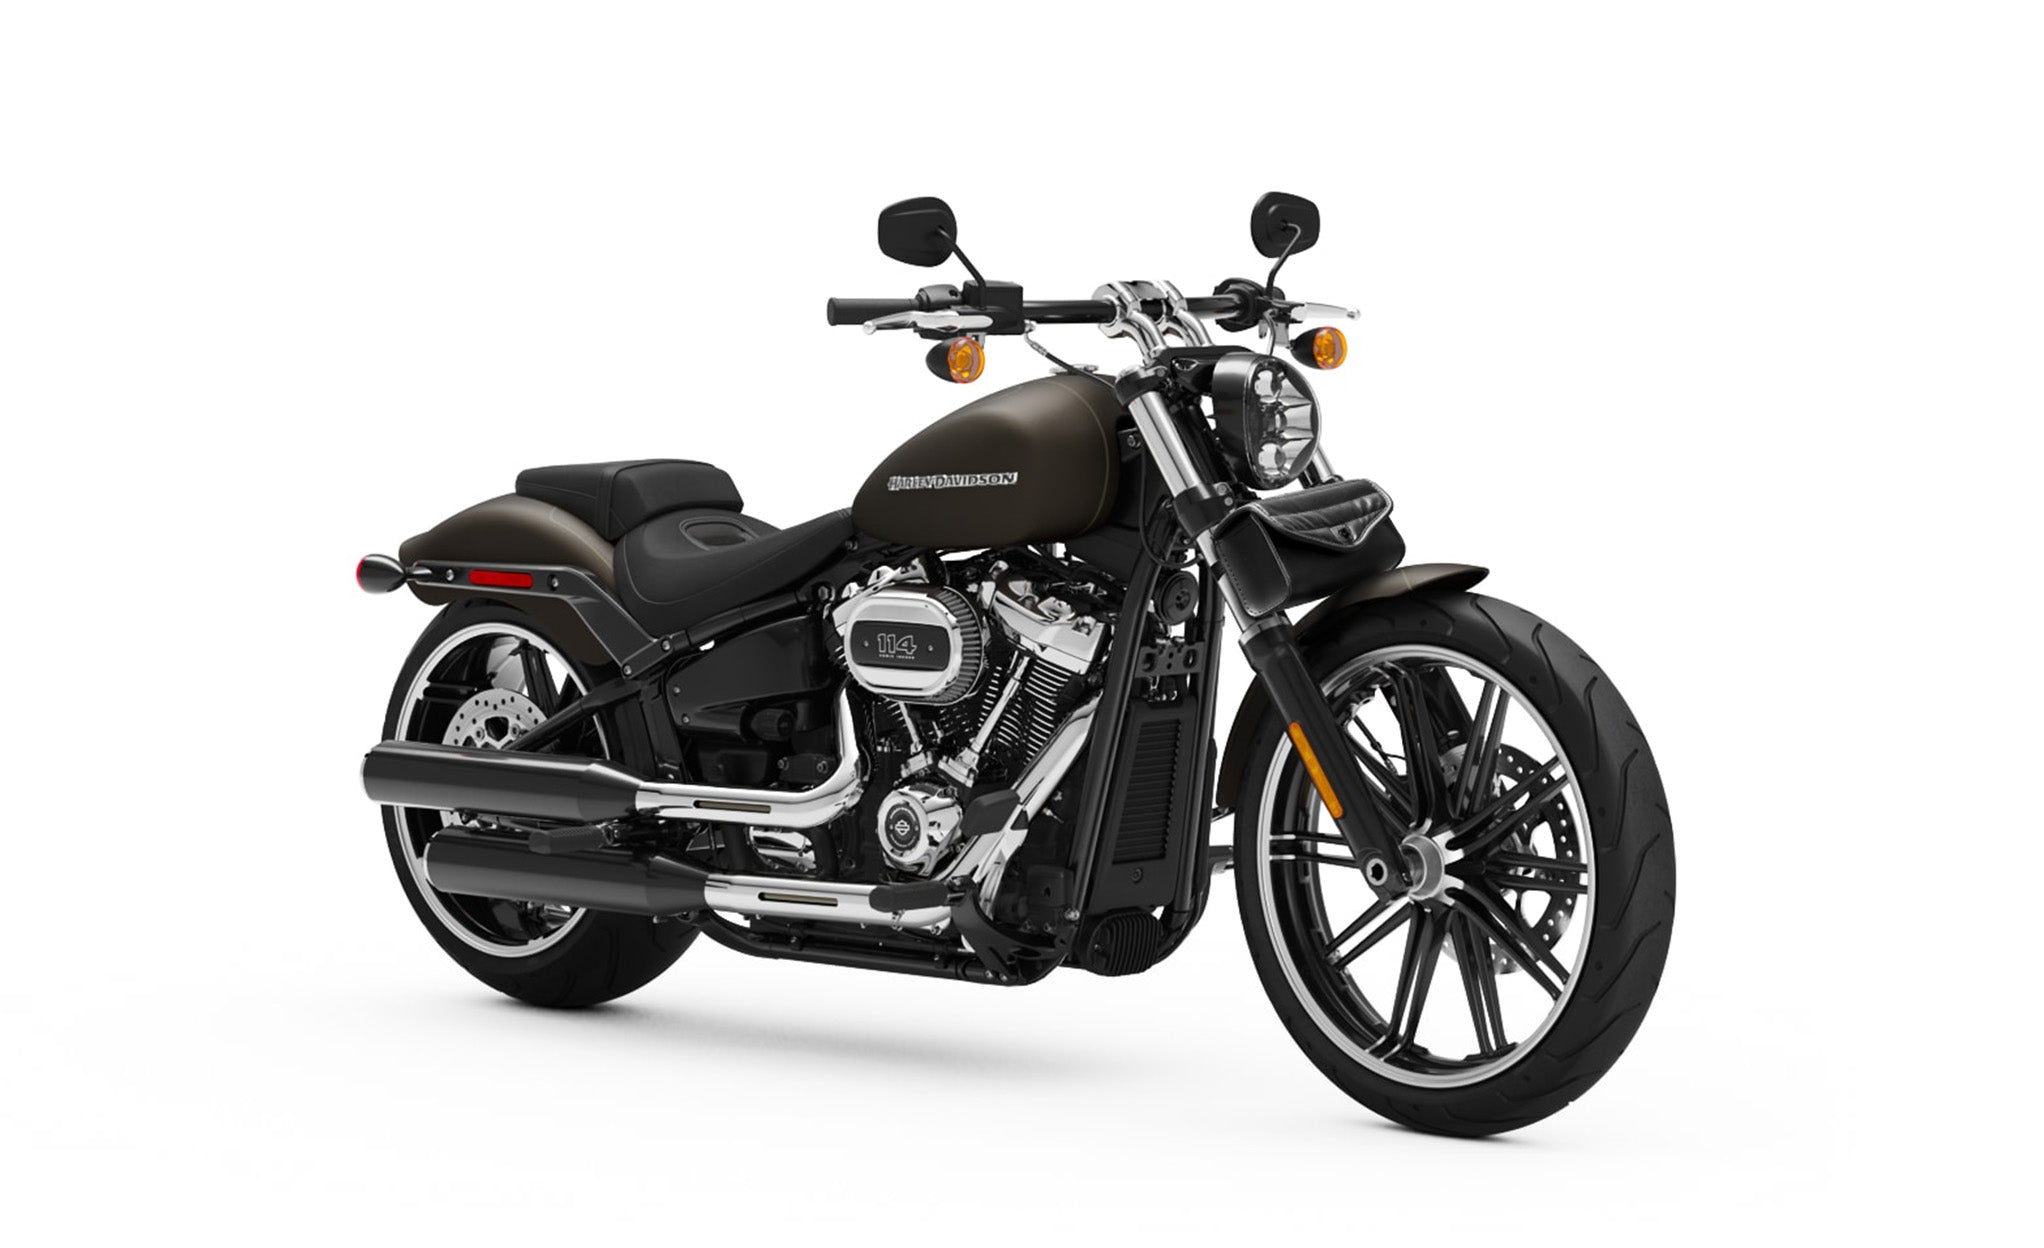 Viking Iron Born Horizontal Stitch Leather Motorcycle Handlebar Bag for Harley Davidson Bag on Bike View @expand